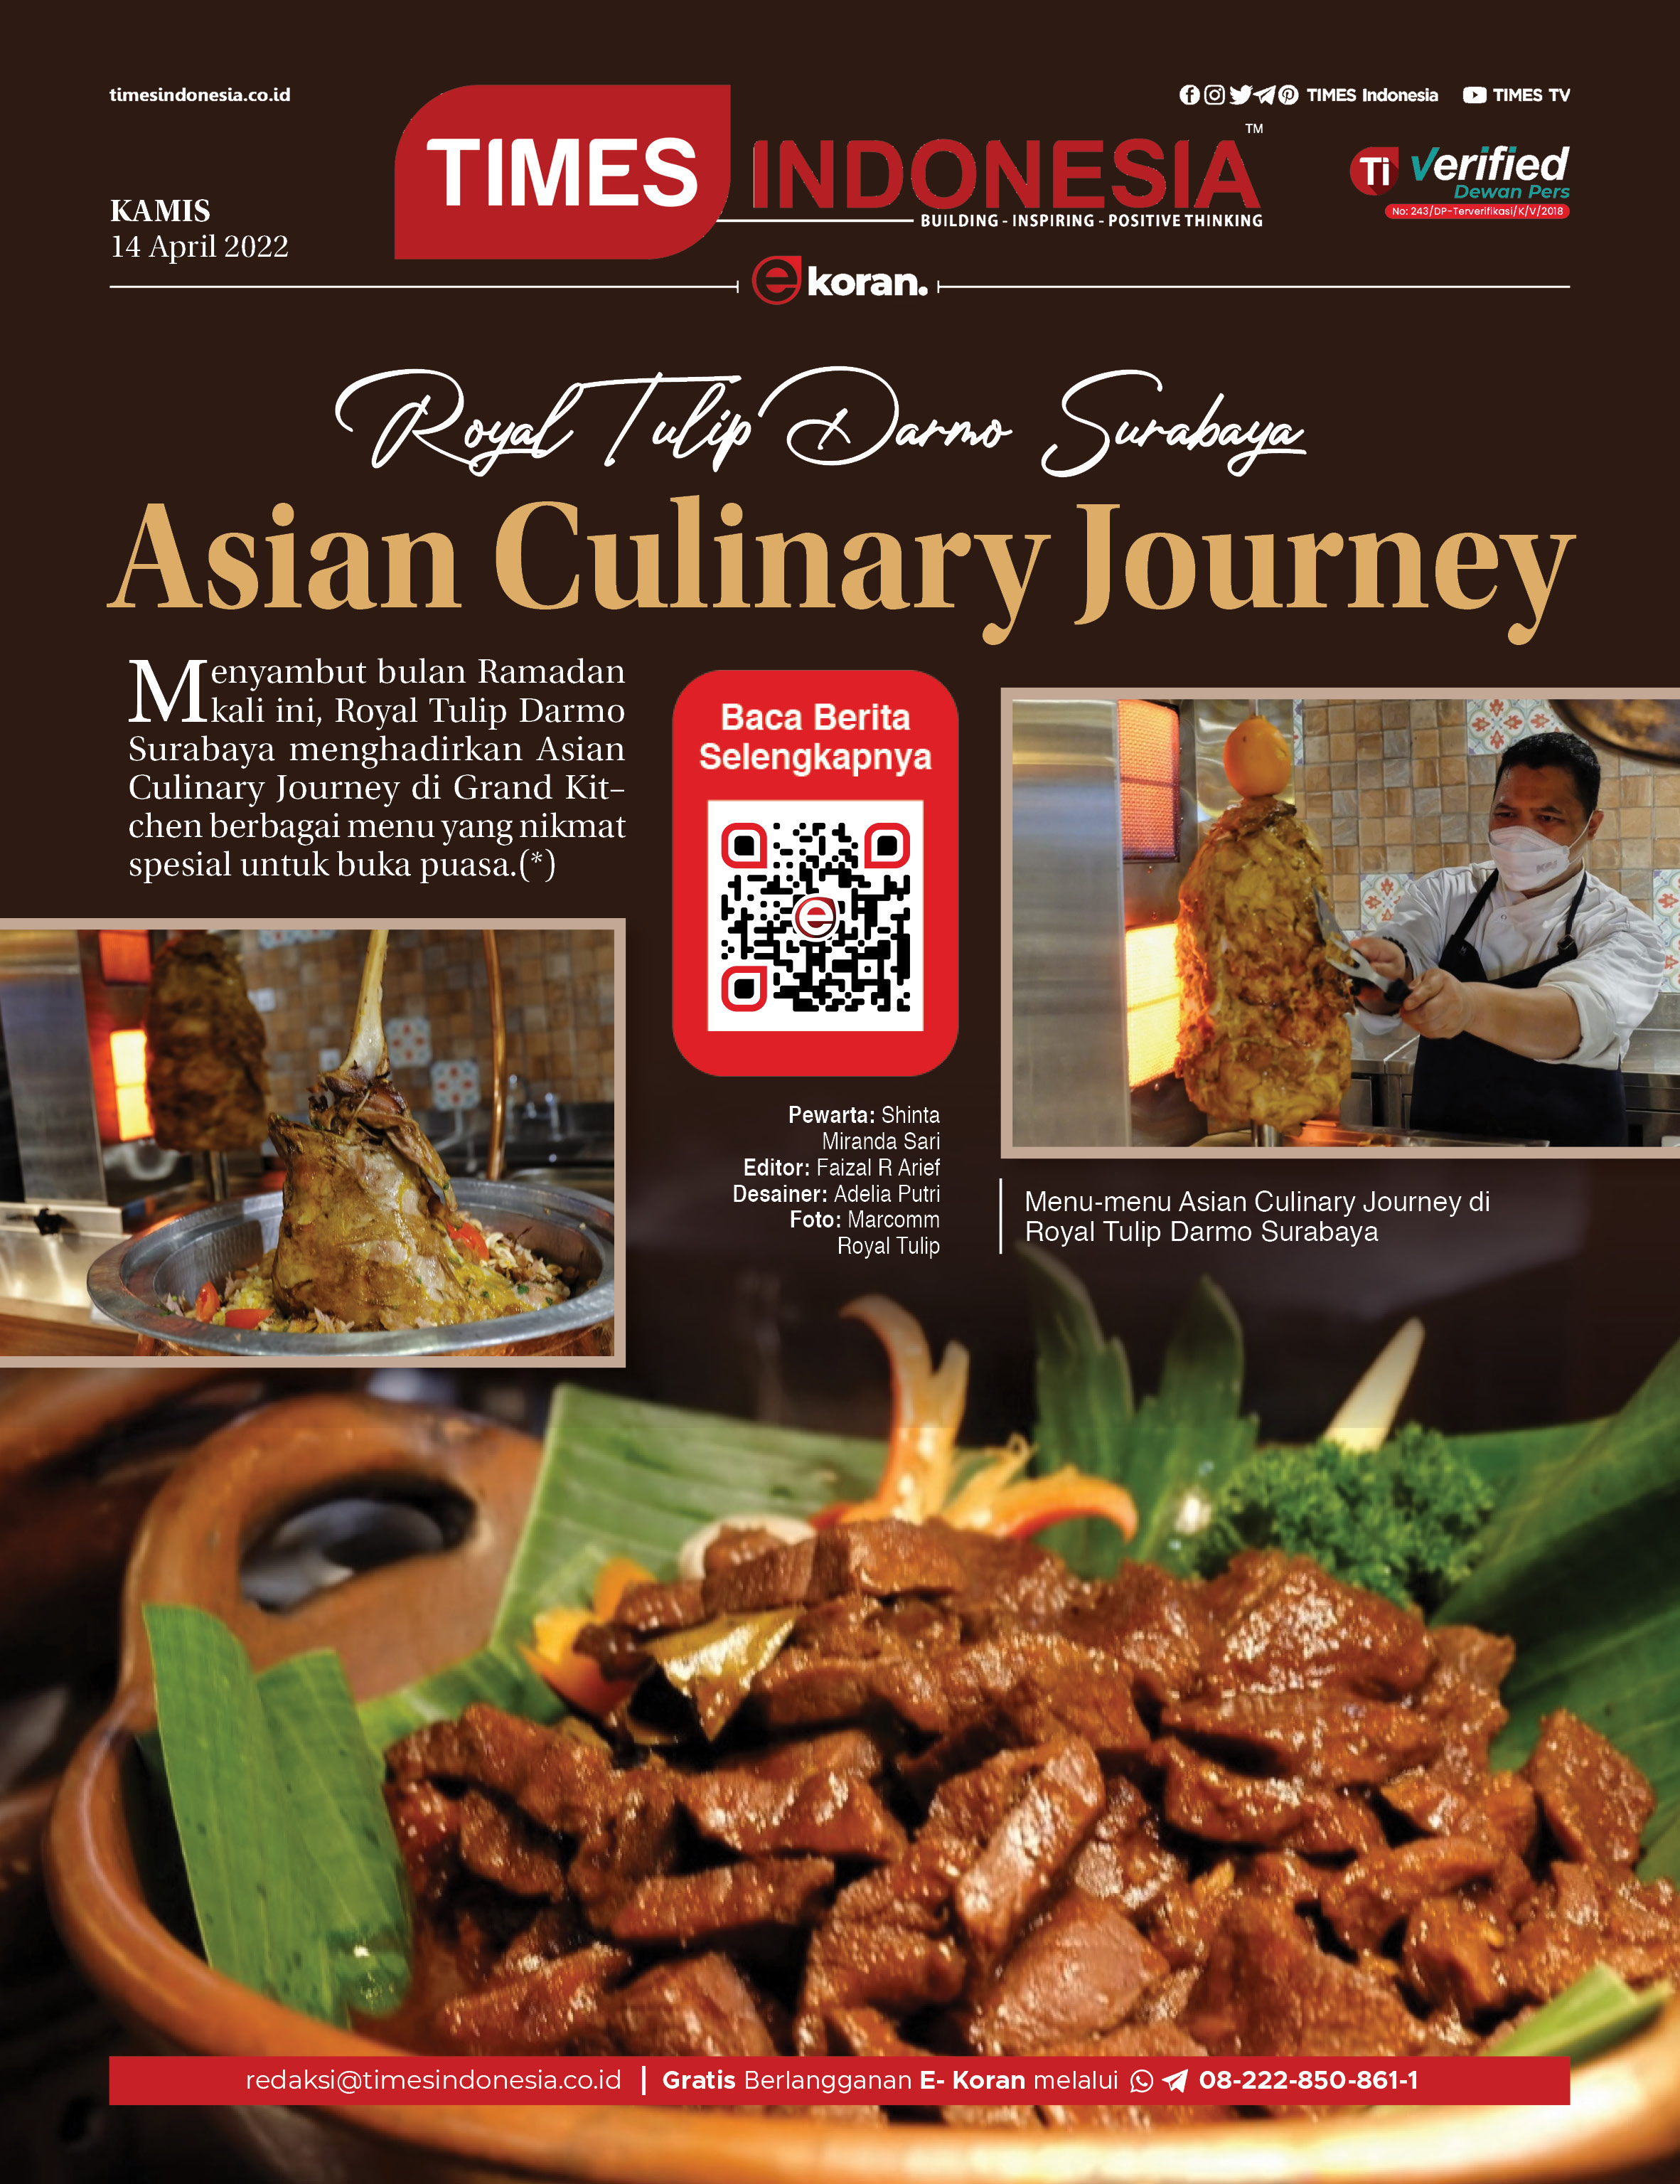 Ekoran-Kamis-14-April-2022-Royal-Tulip-Darmo-Surabaya-Asian-Culinary-Journey.jpg